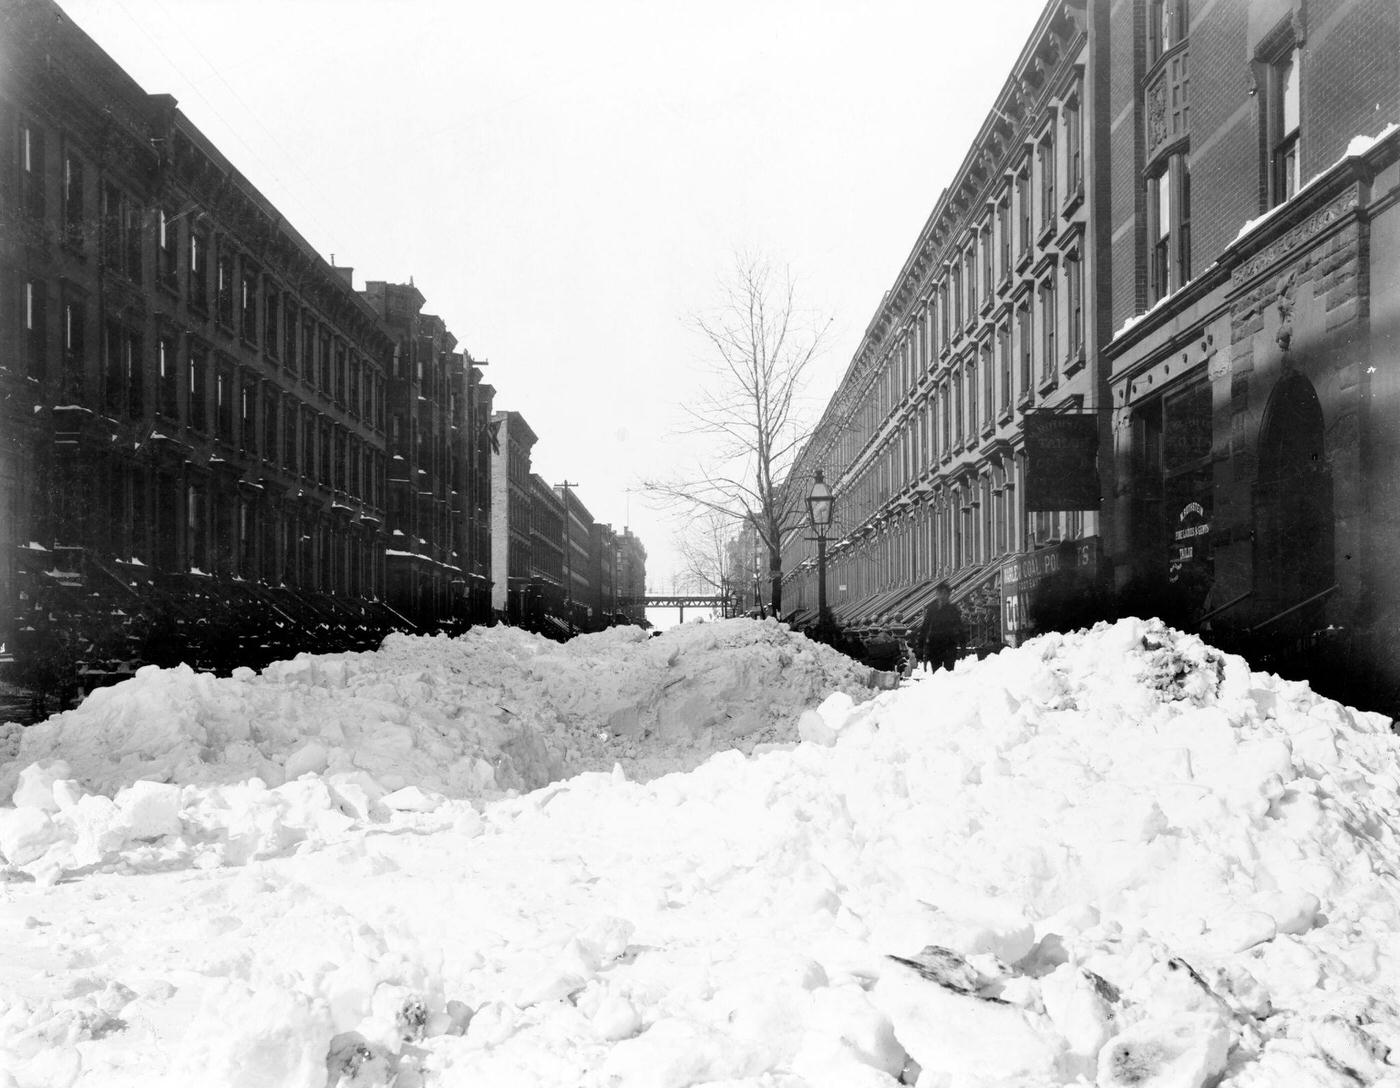 Harlem After The Blizzard: Snow-Filled Street In Harlem, 1899.